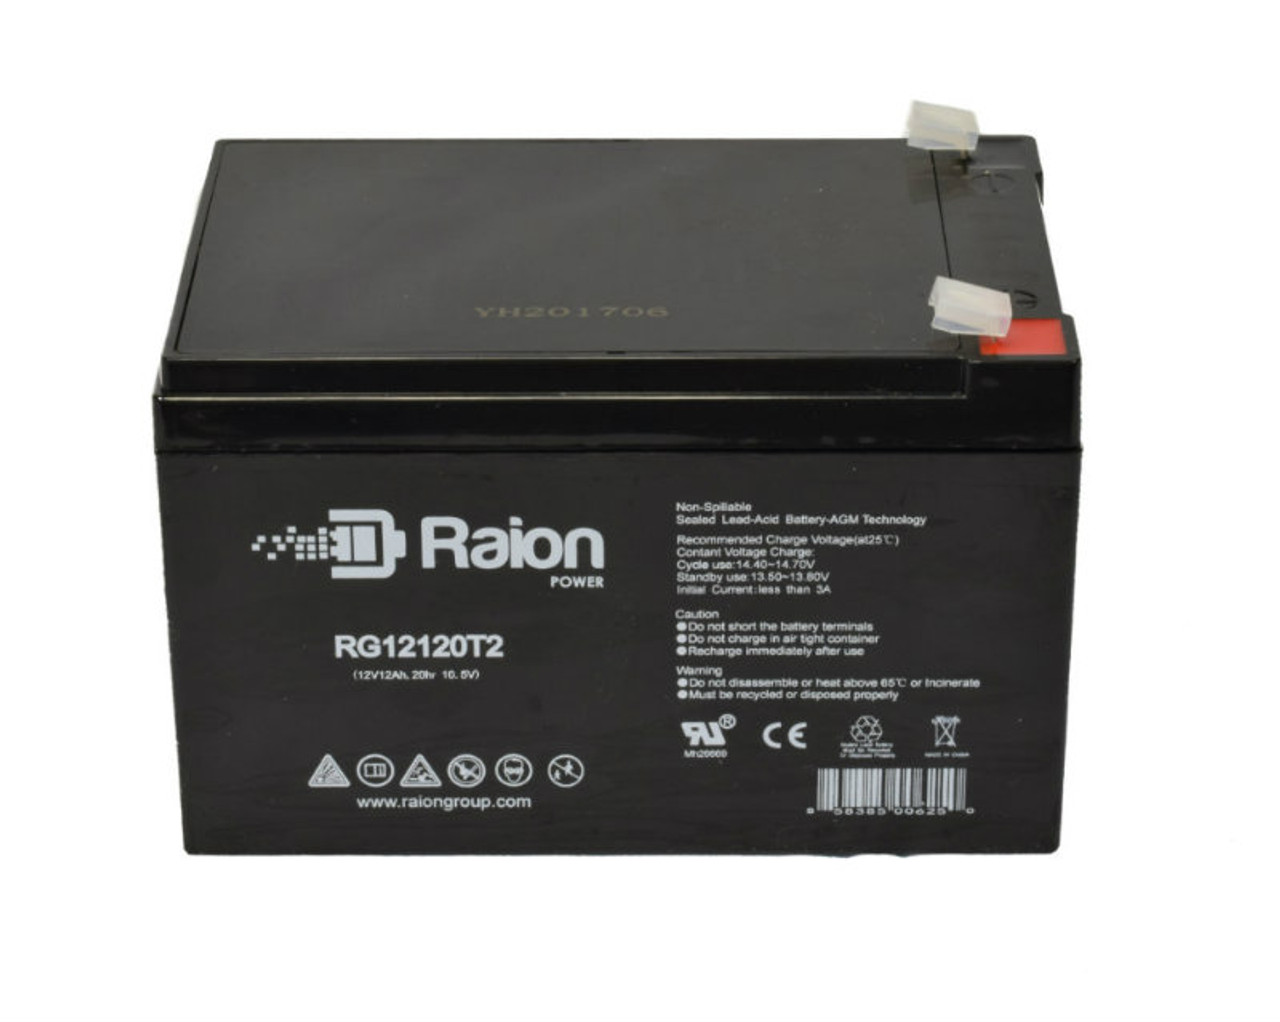 Raion Power RG12120T2 SLA Battery for Sonnenschein CR1212